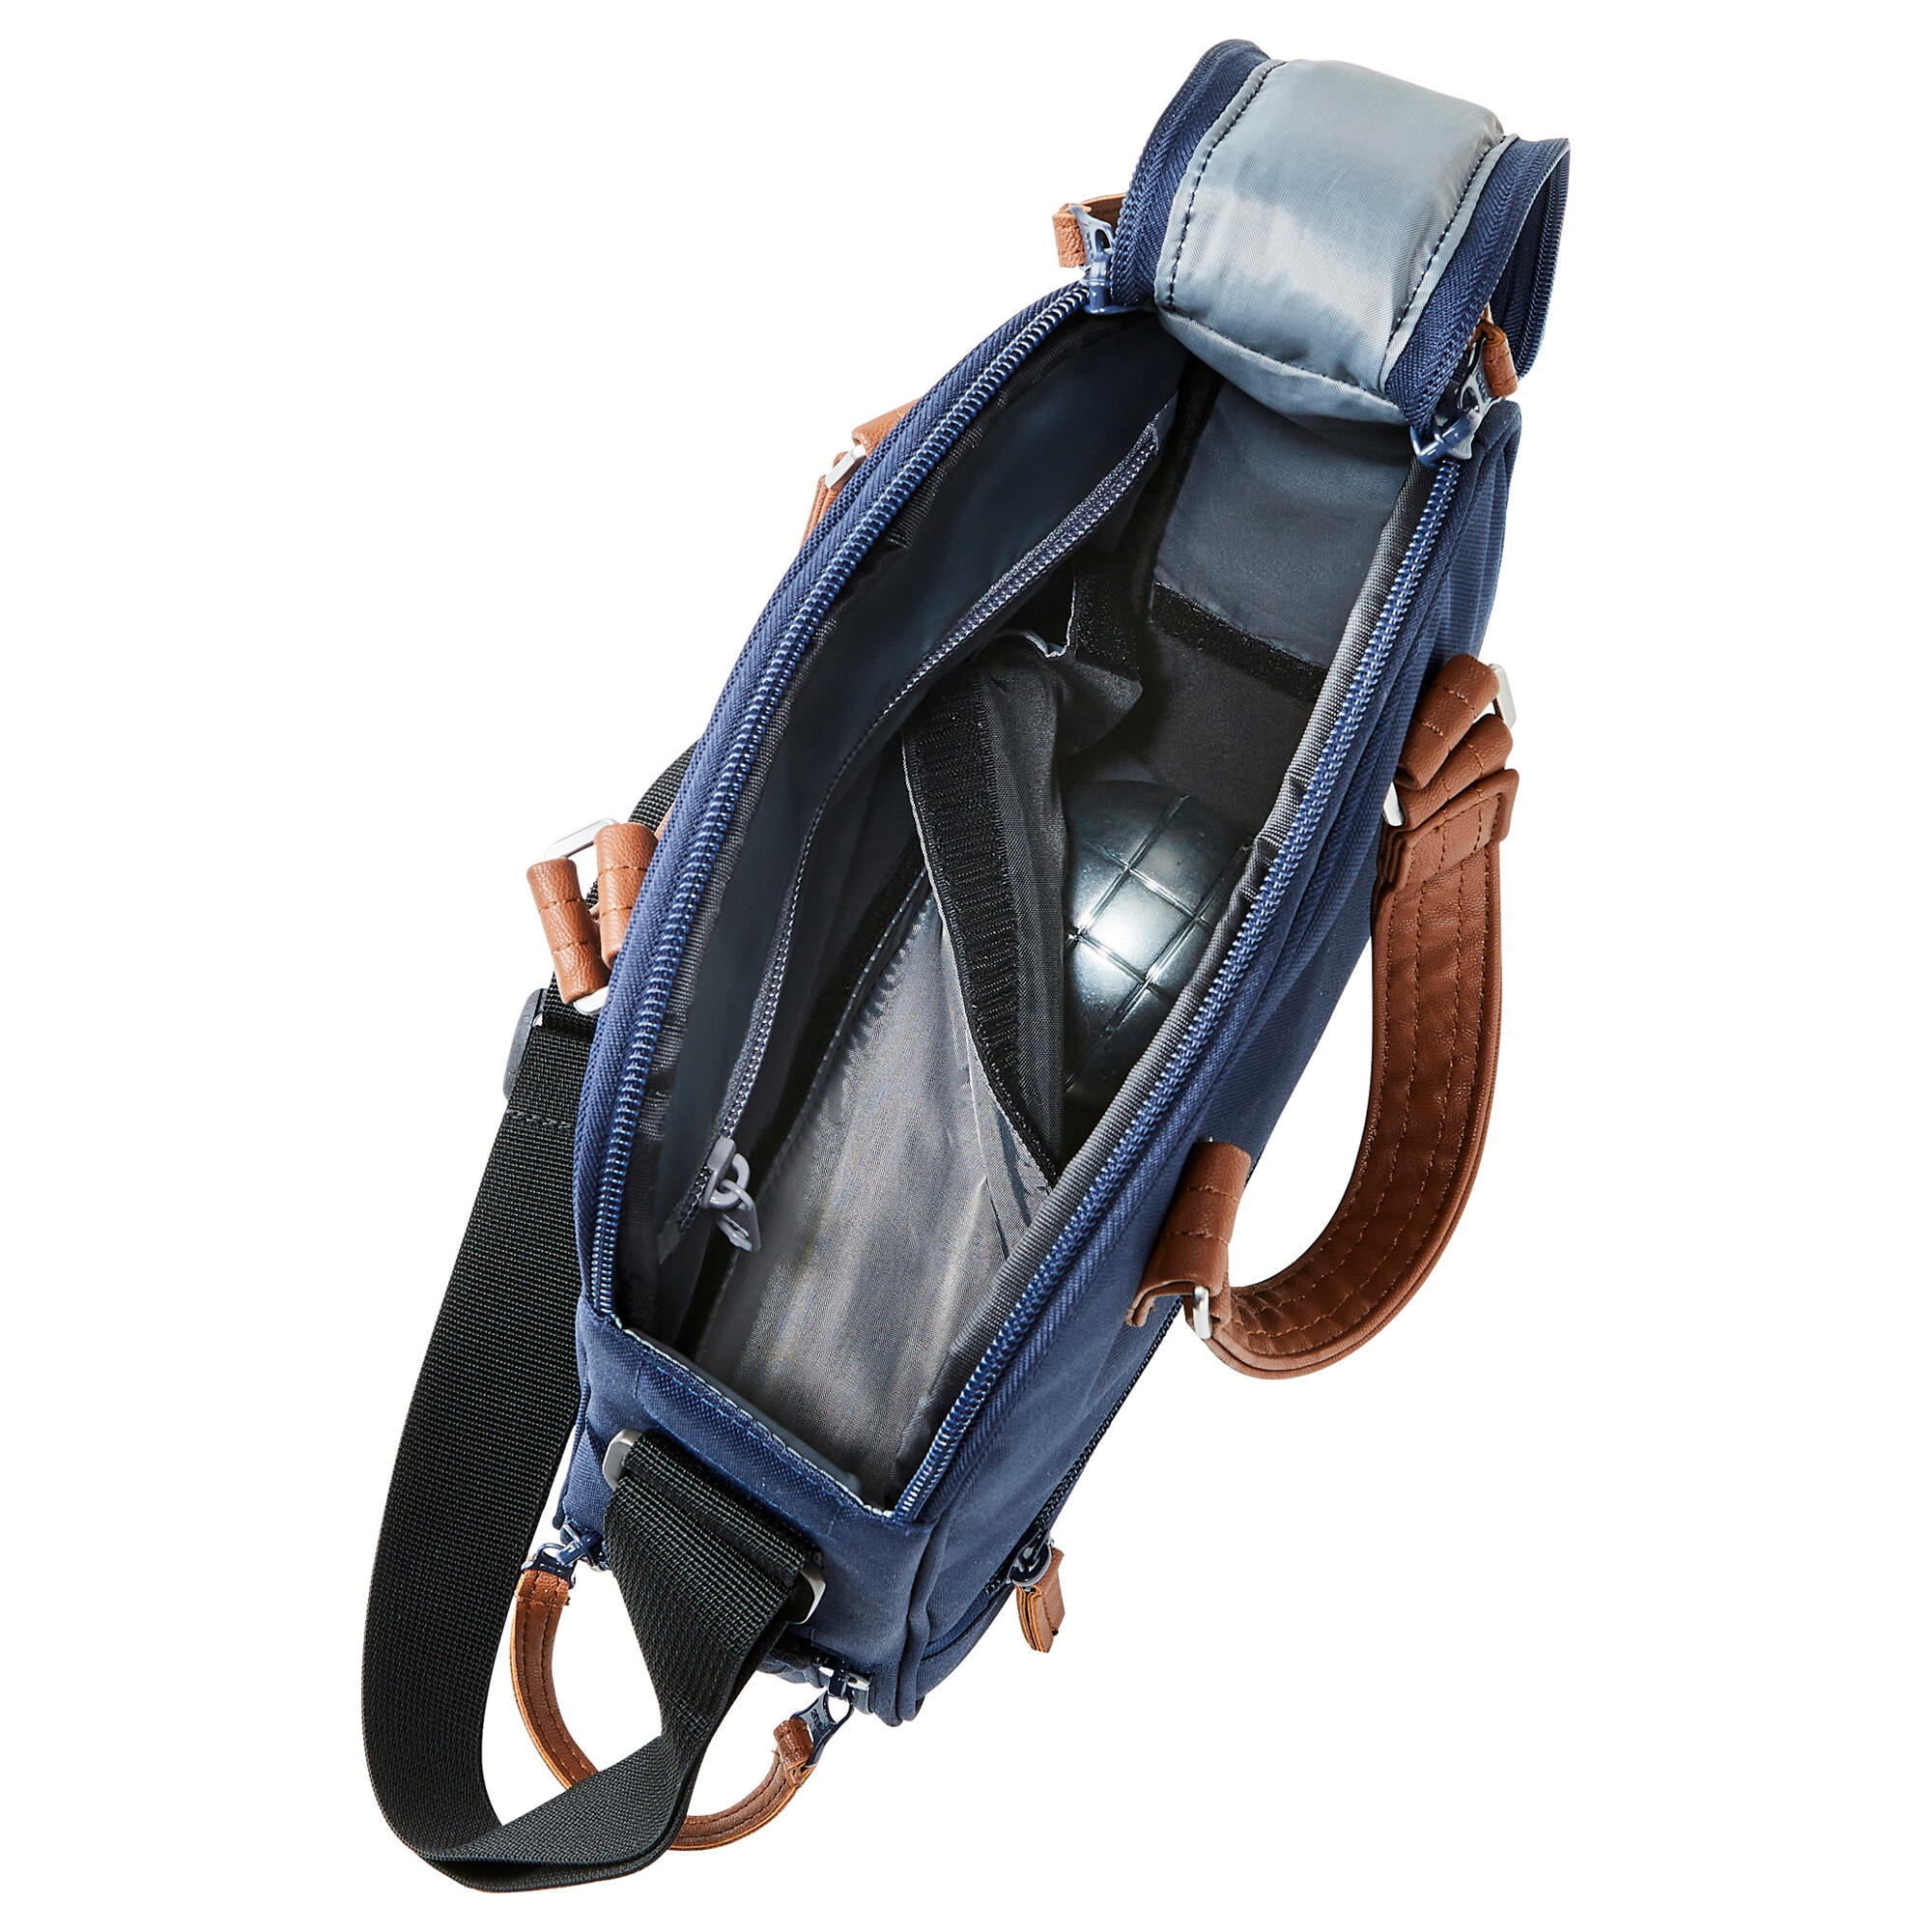 Semi-Rigid XL Bag for 3 Petanque Boules and Accessories - Blue 5/7